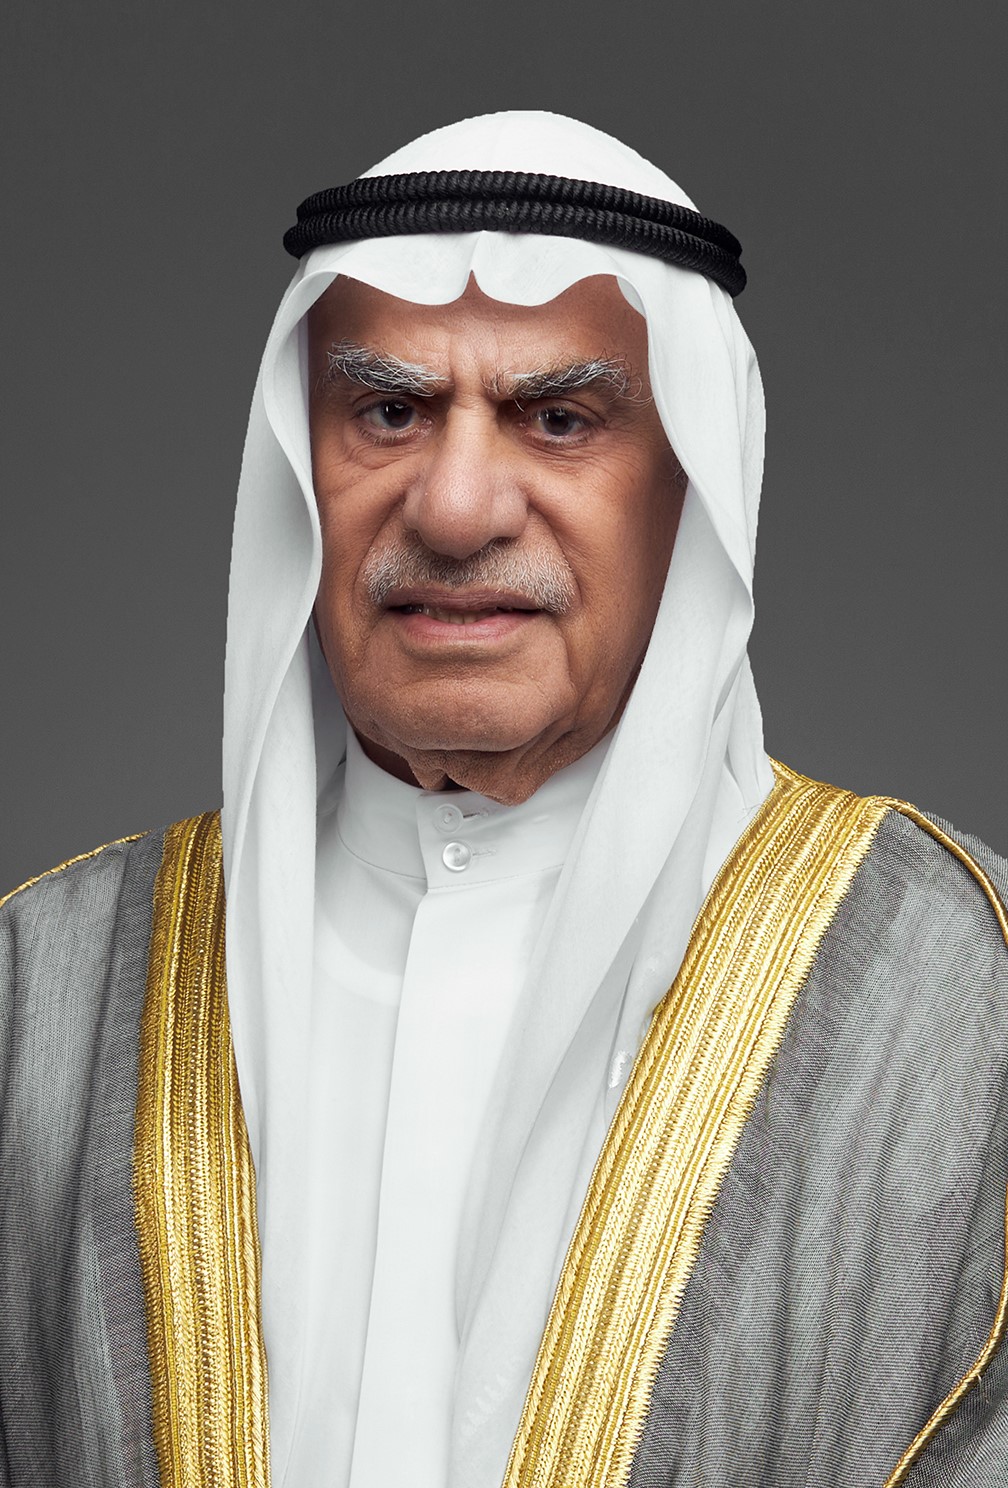 National Assembly Speaker Ahmad Al-Saadoun